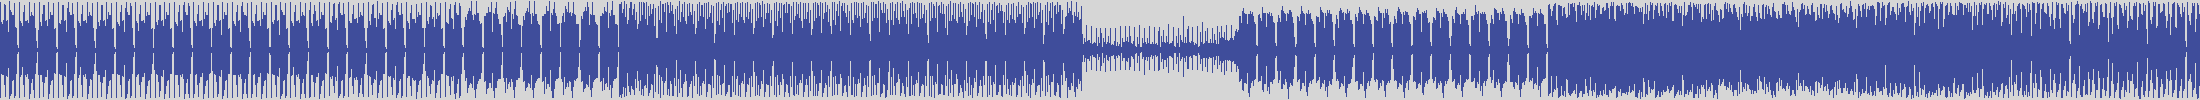 nf_boyz_records [NFY020] Liana Cross - No Time [Caotic Tech Edit] audio wave form